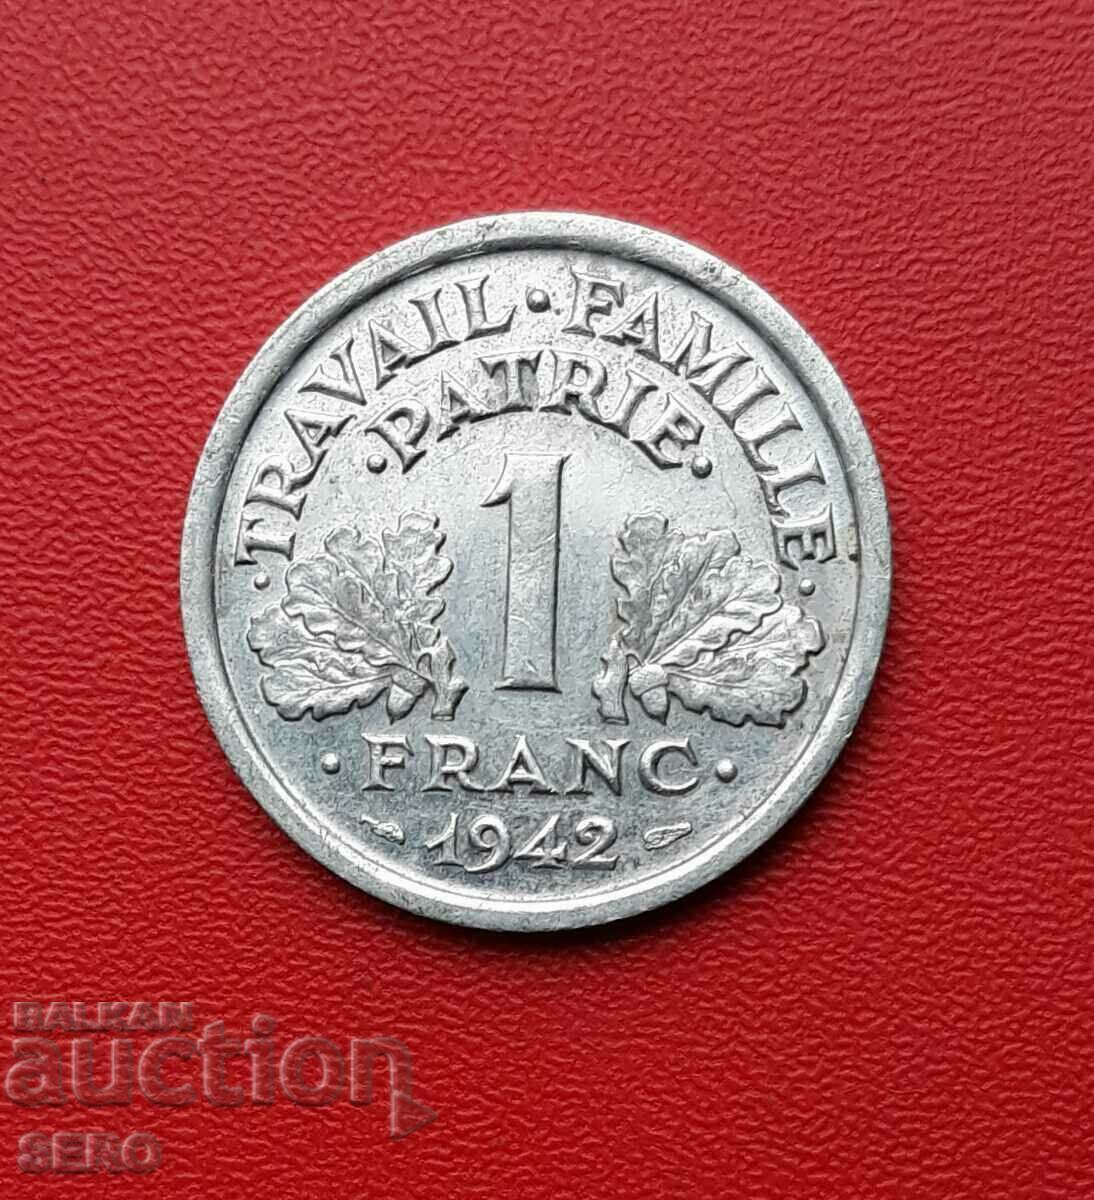 France-1 franc 1942